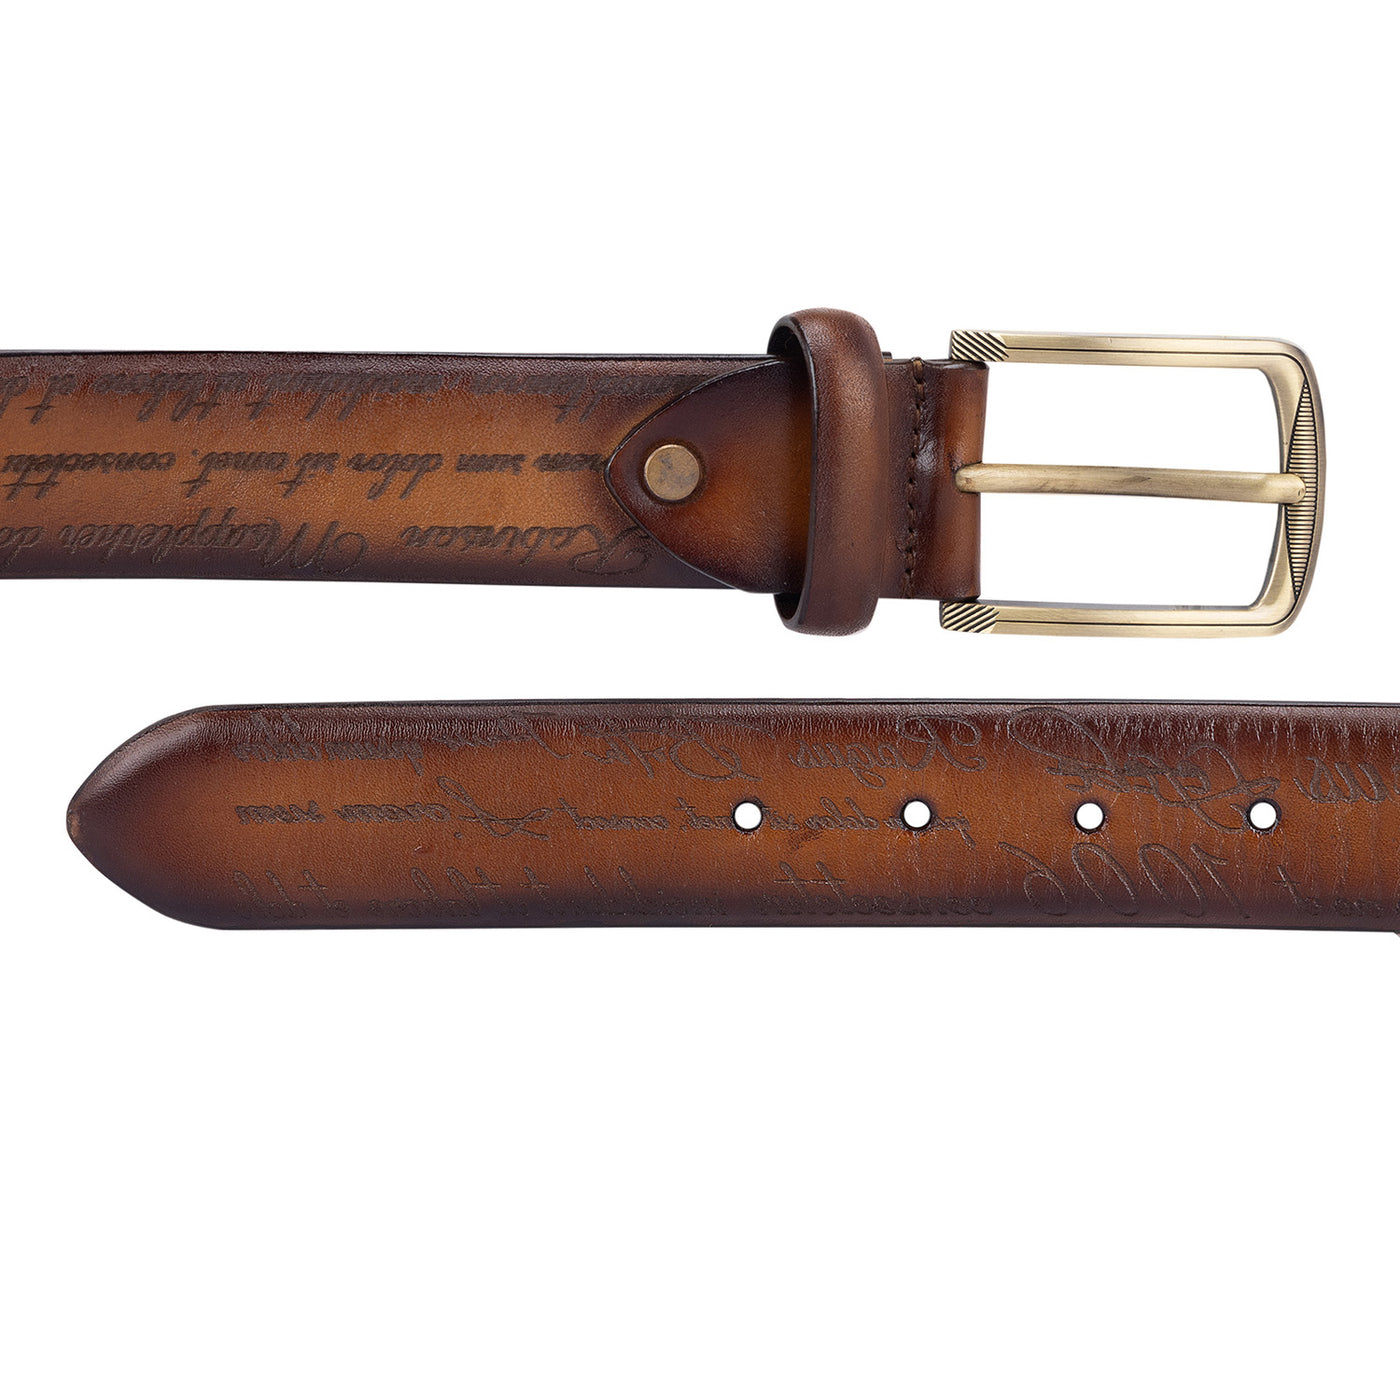 Cognac Signato Leather Mens Wallet & Belt Gift Set